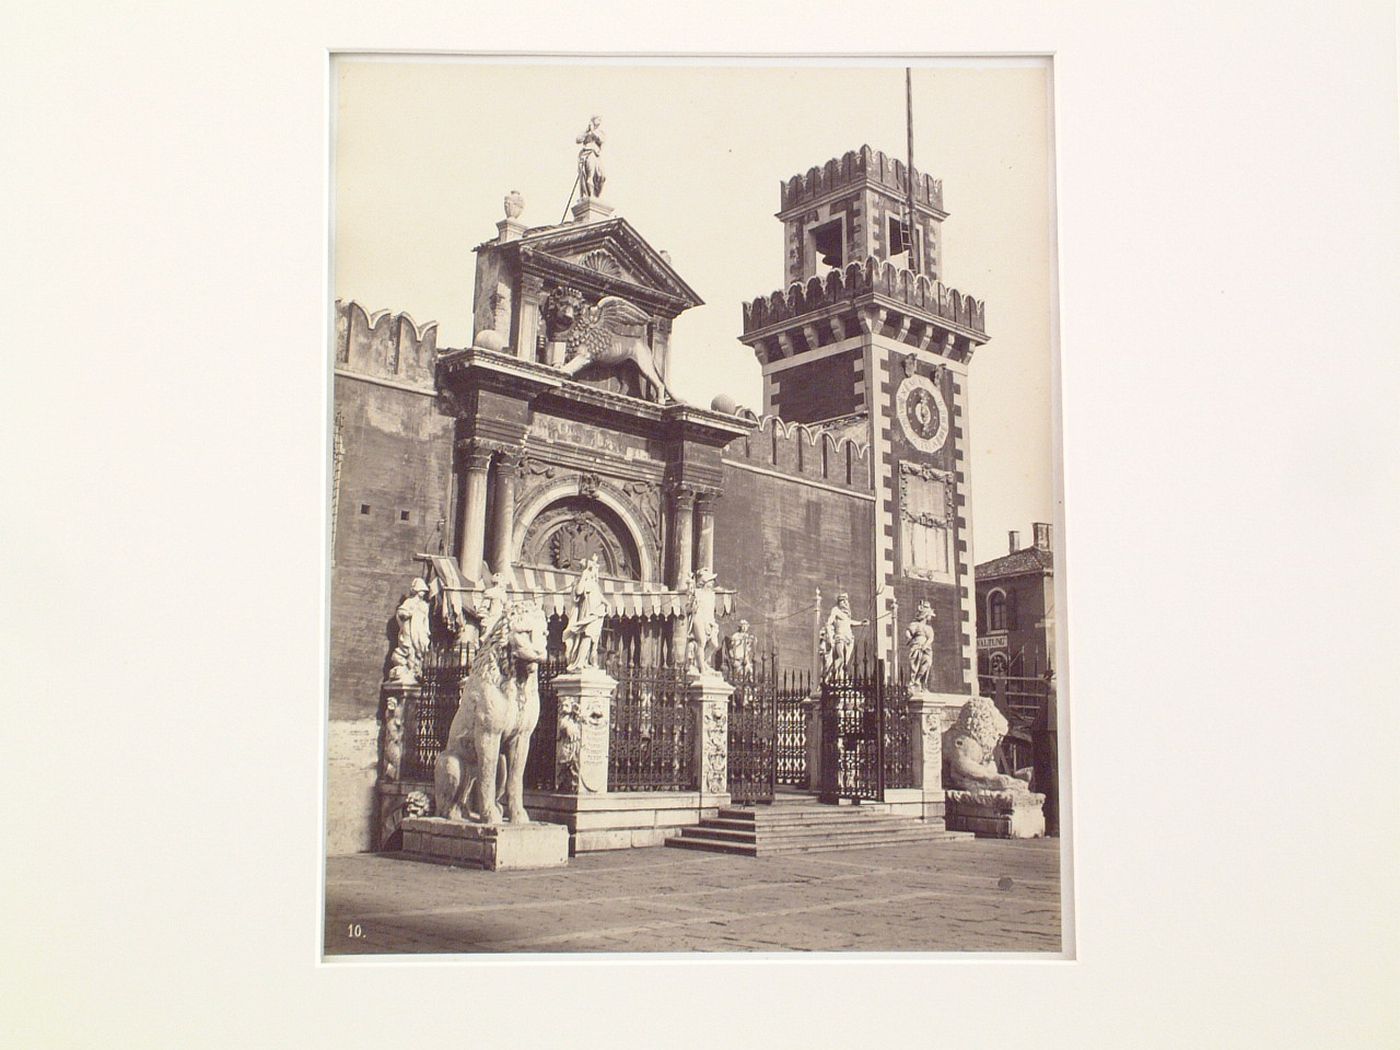 Doors of the Arsenal and Statuary, Venice, Italy